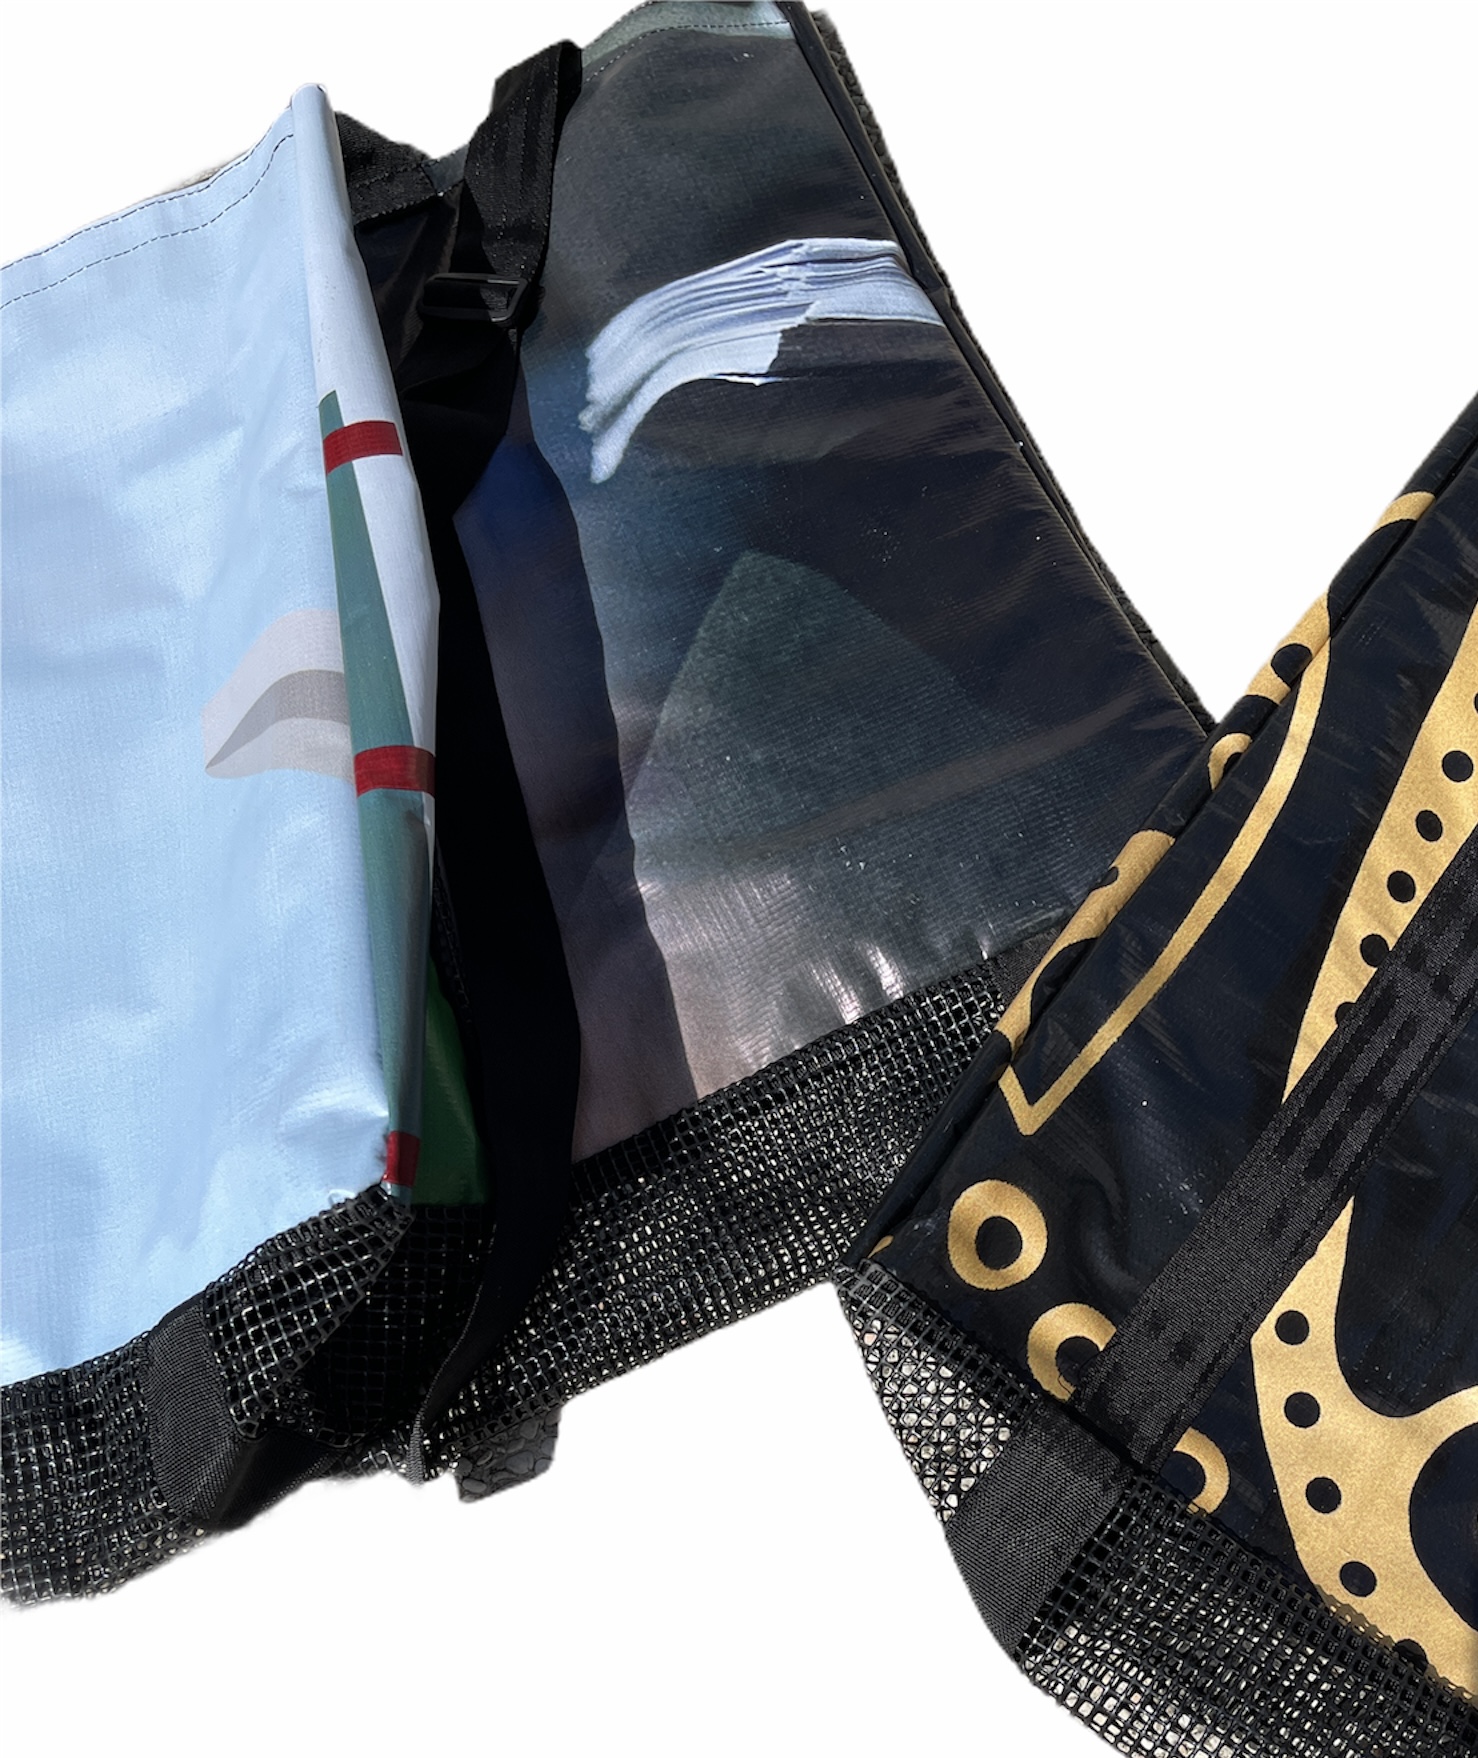 Lermende Travel Shoe Bags Waterproof Nylon Organizer Storage Tote